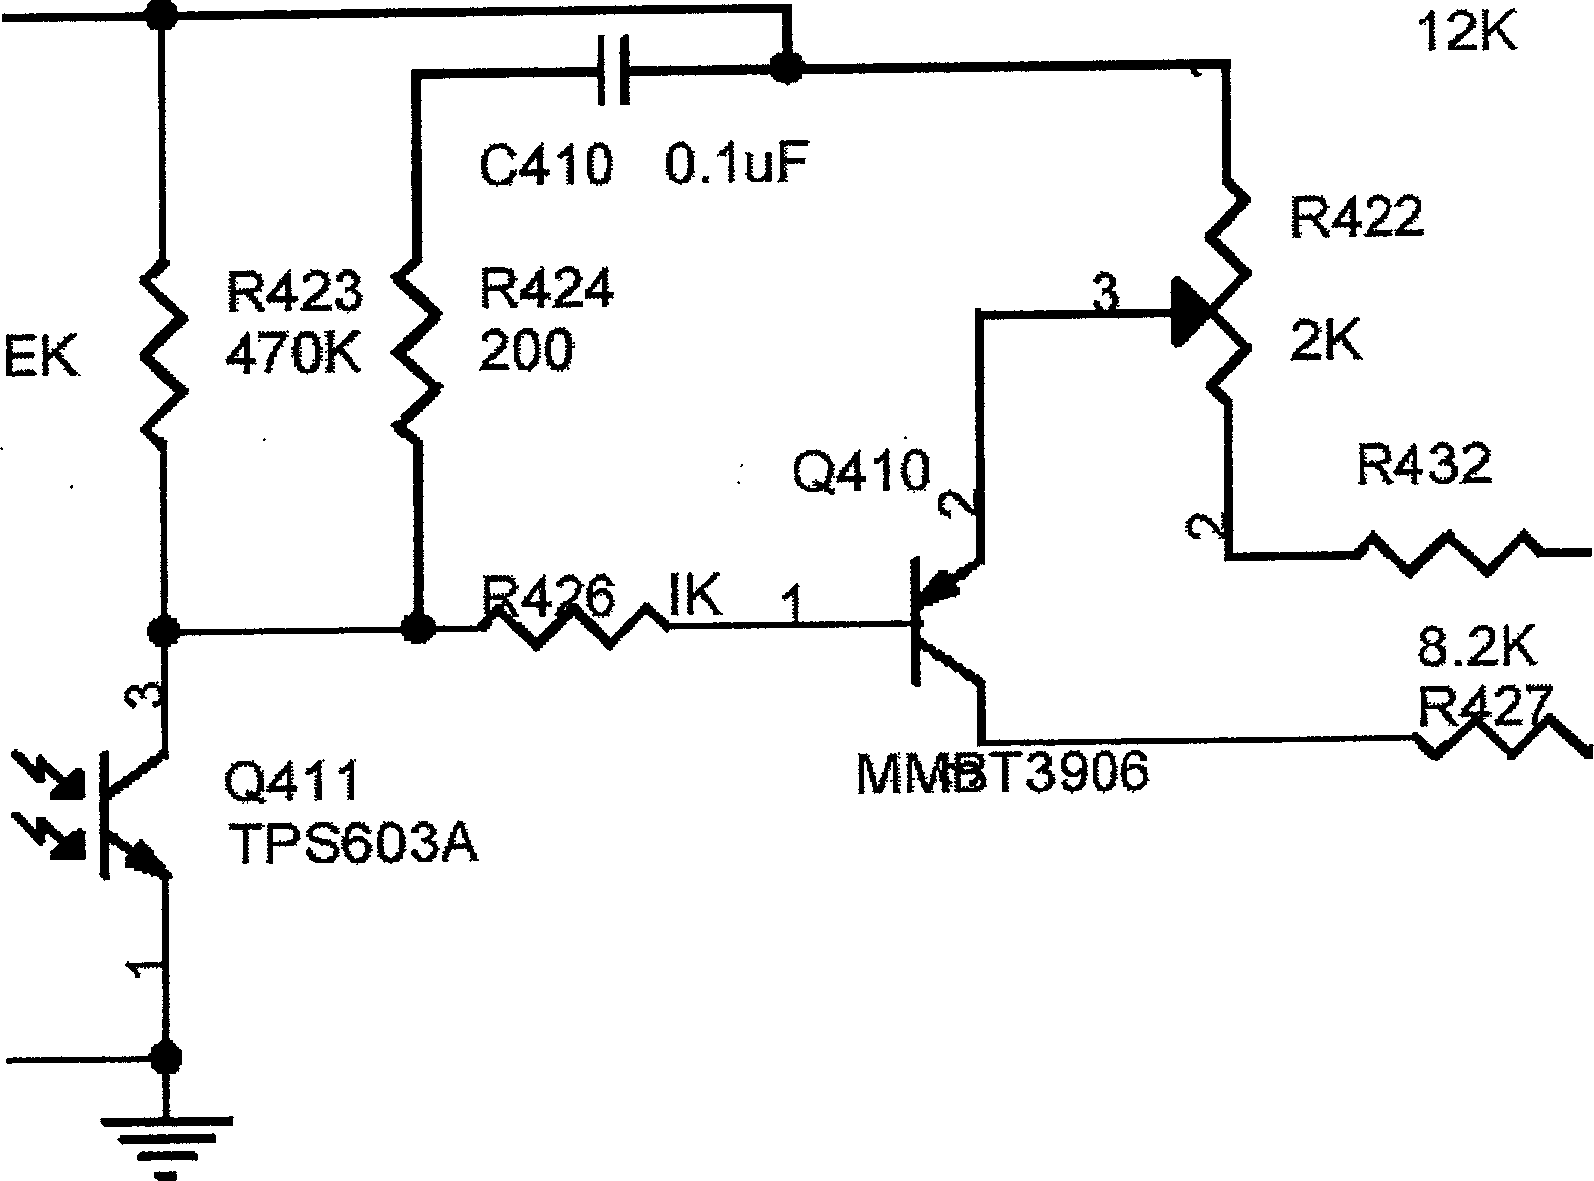 Automatic regulating flash light circuit